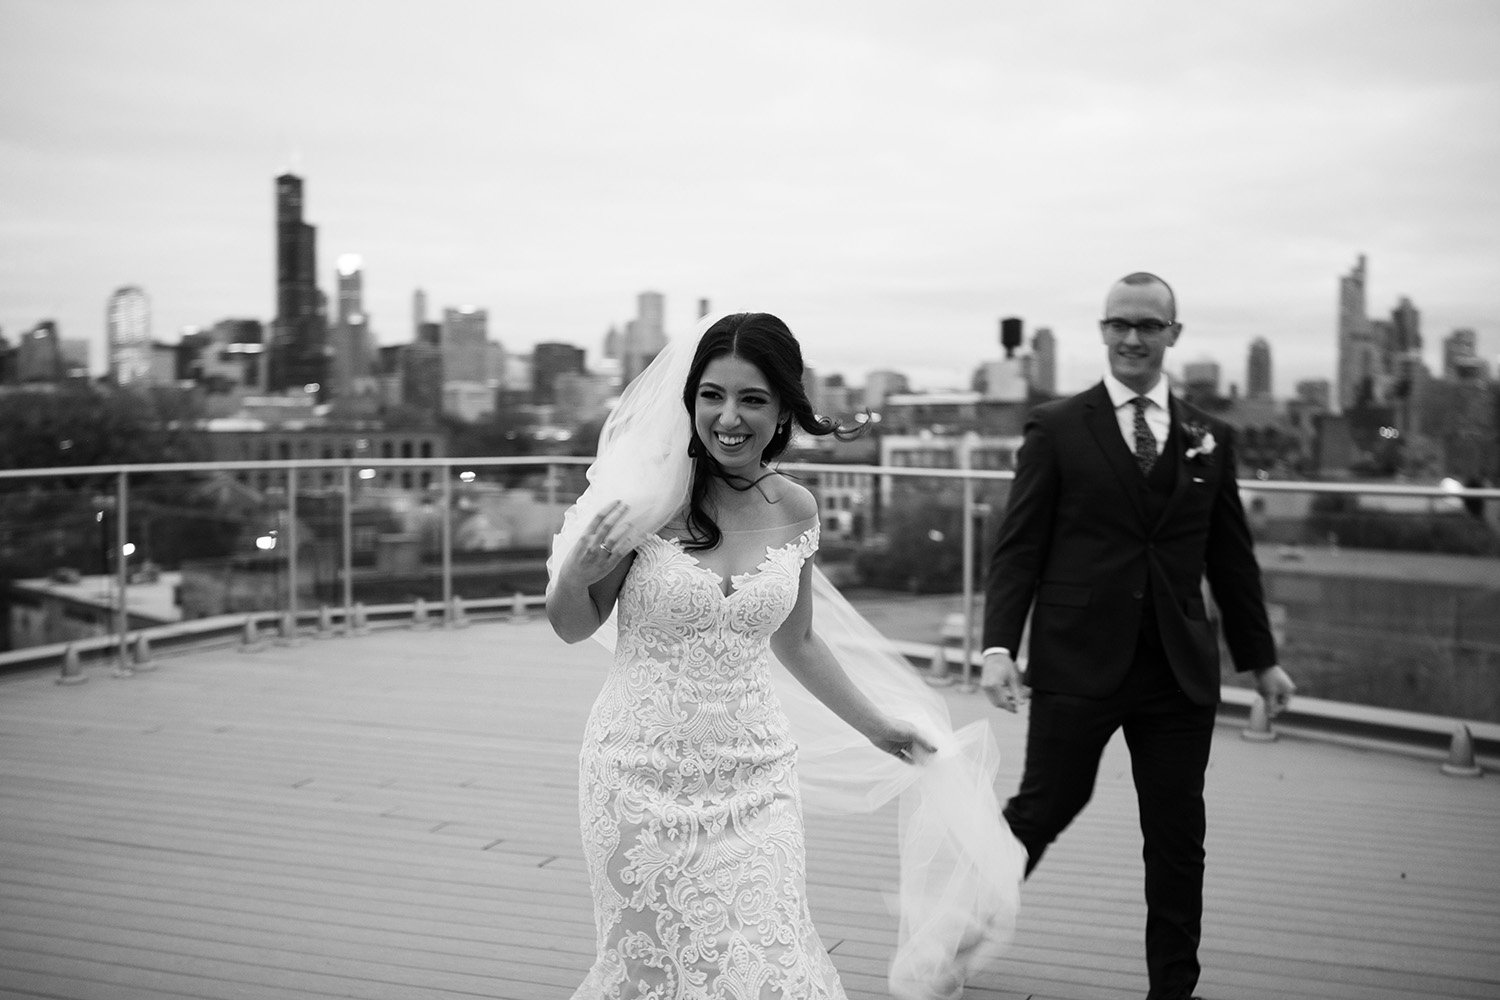 Chicago artistic documentary wedding photographer 031.jpg